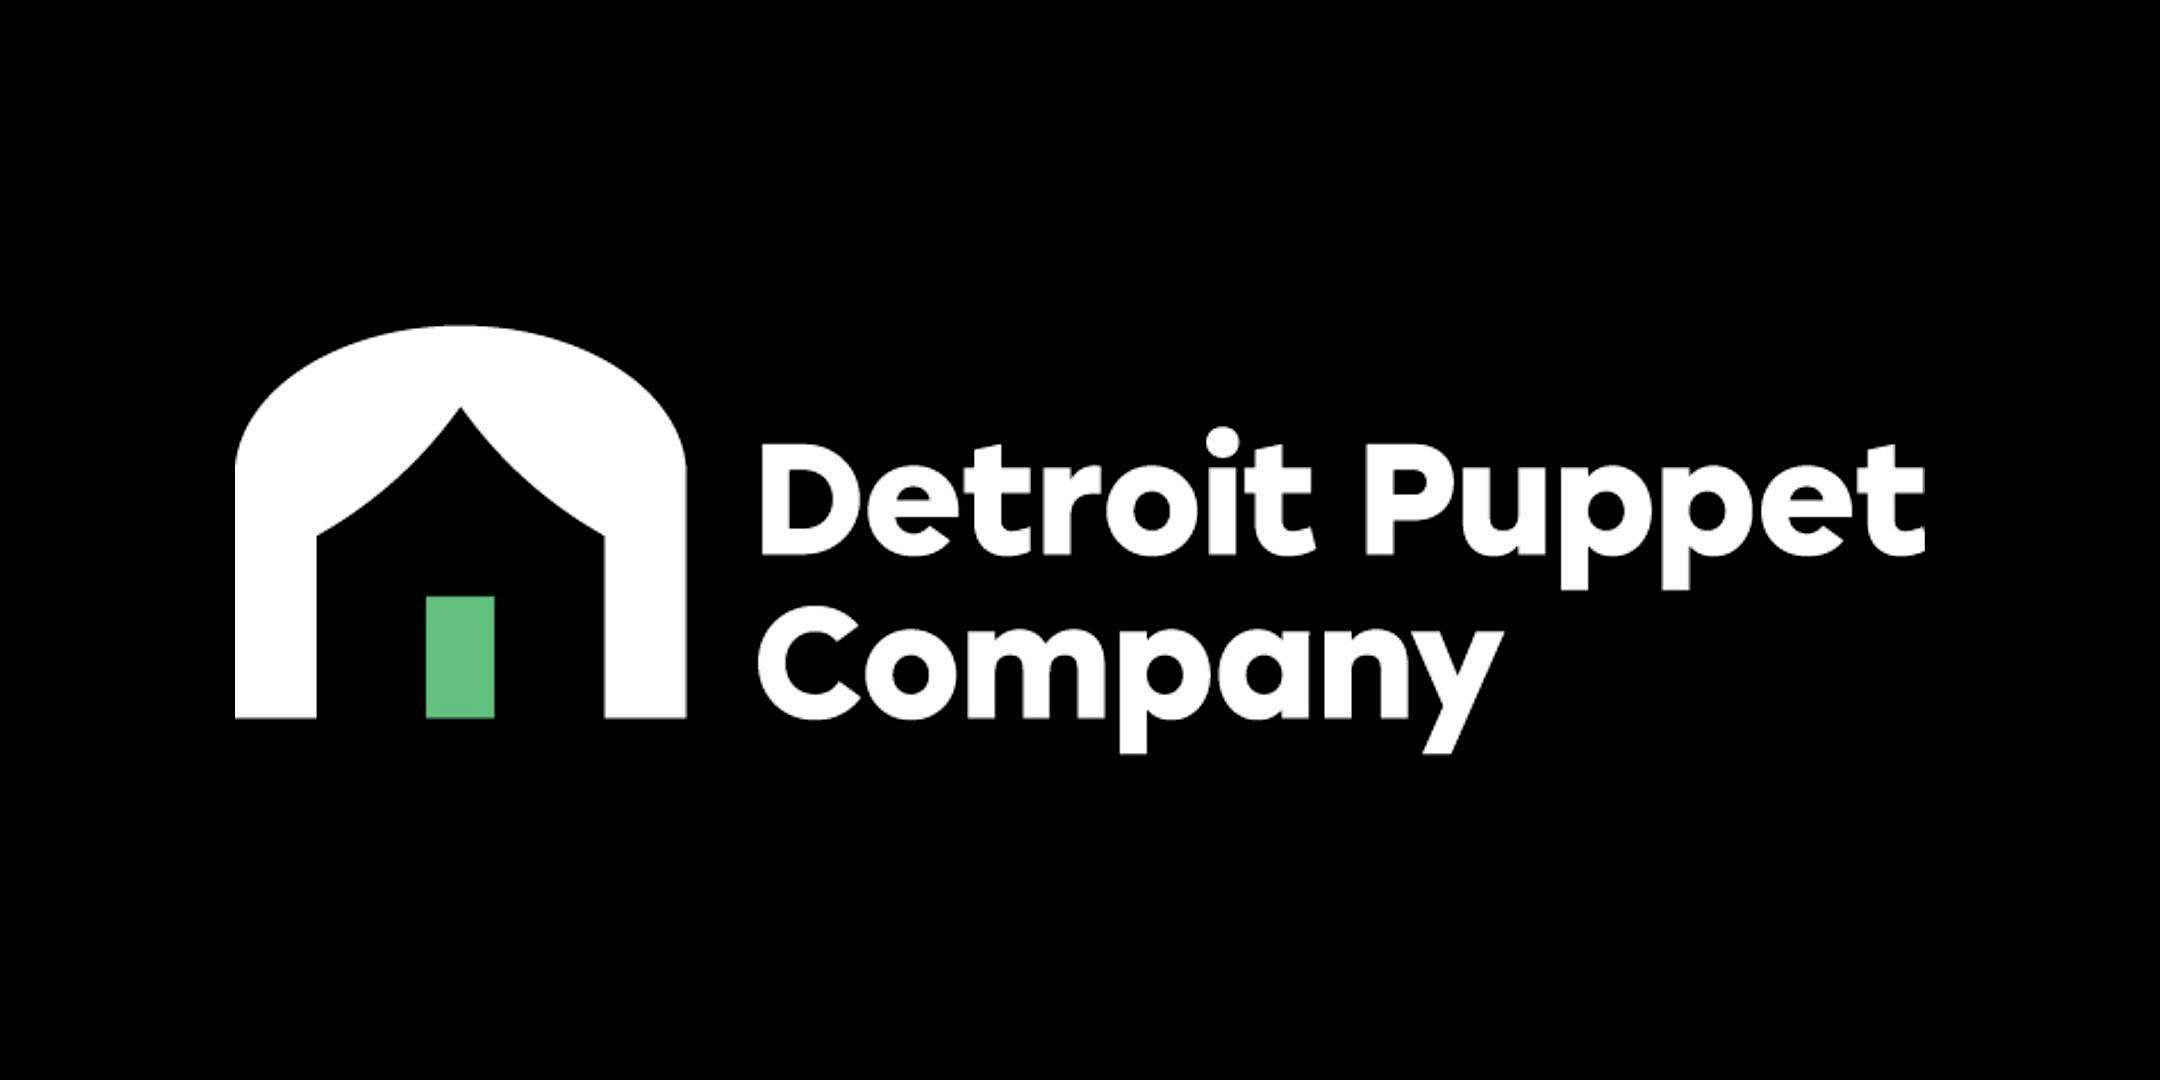 Shadow Puppet Workshop Detroit Puppet Company